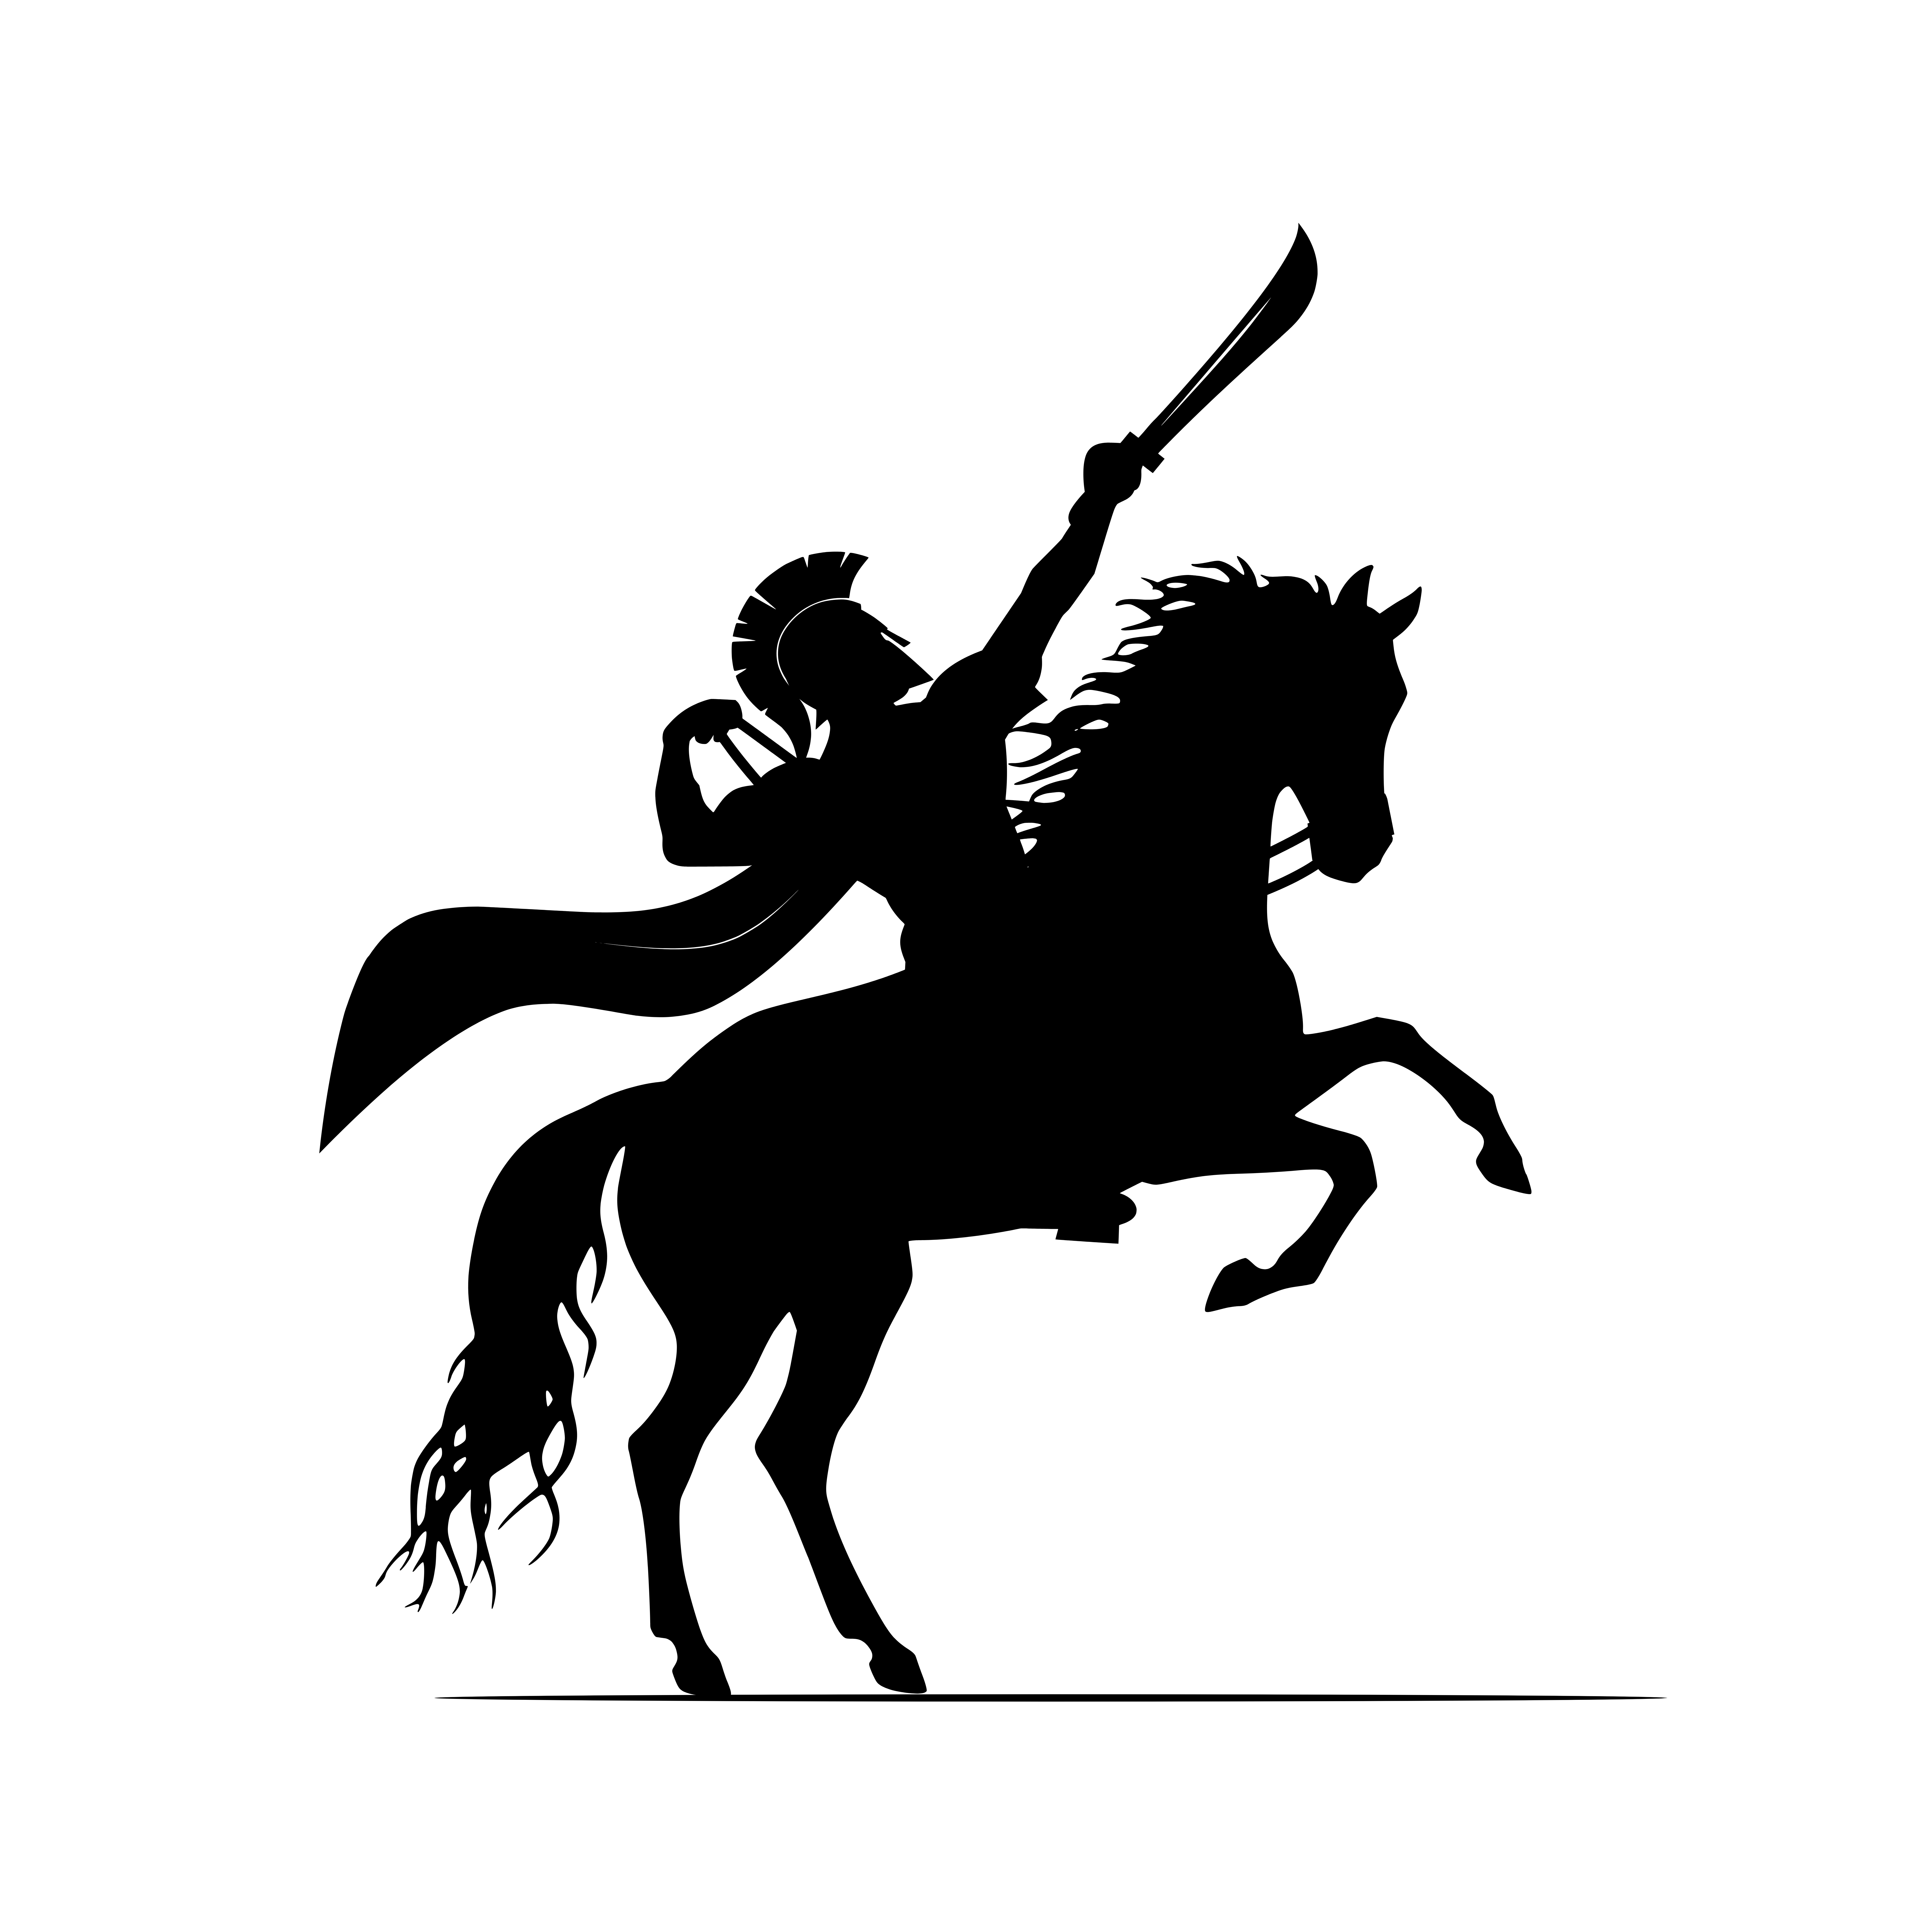 Spartan warrior on horseback silhouette design